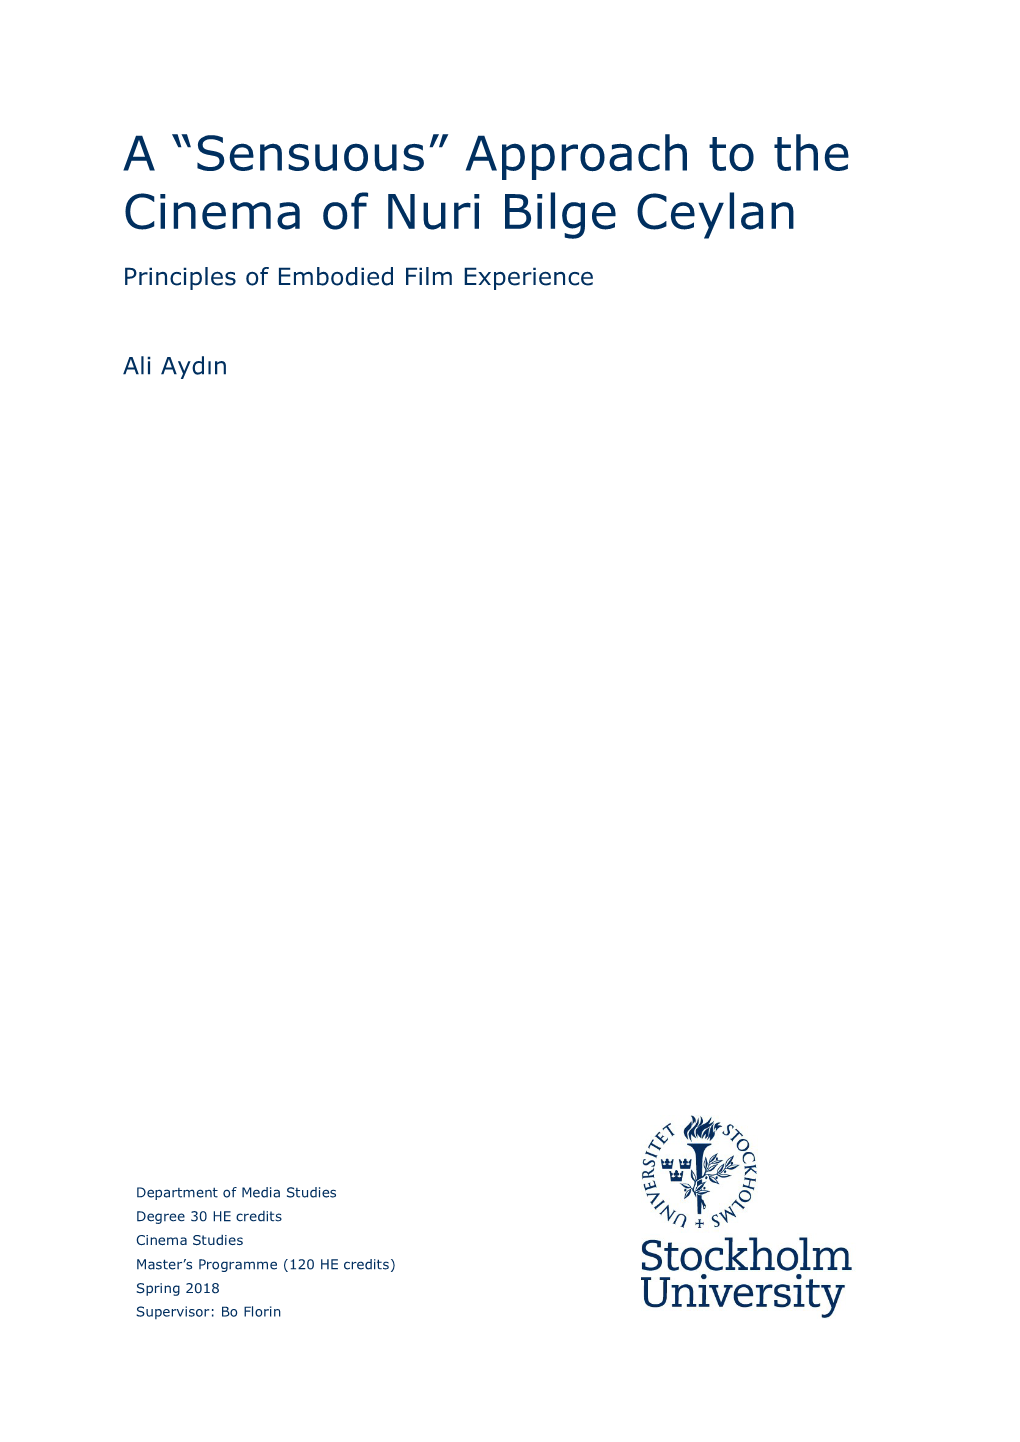 A “Sensuous” Approach to the Cinema of Nuri Bilge Ceylan